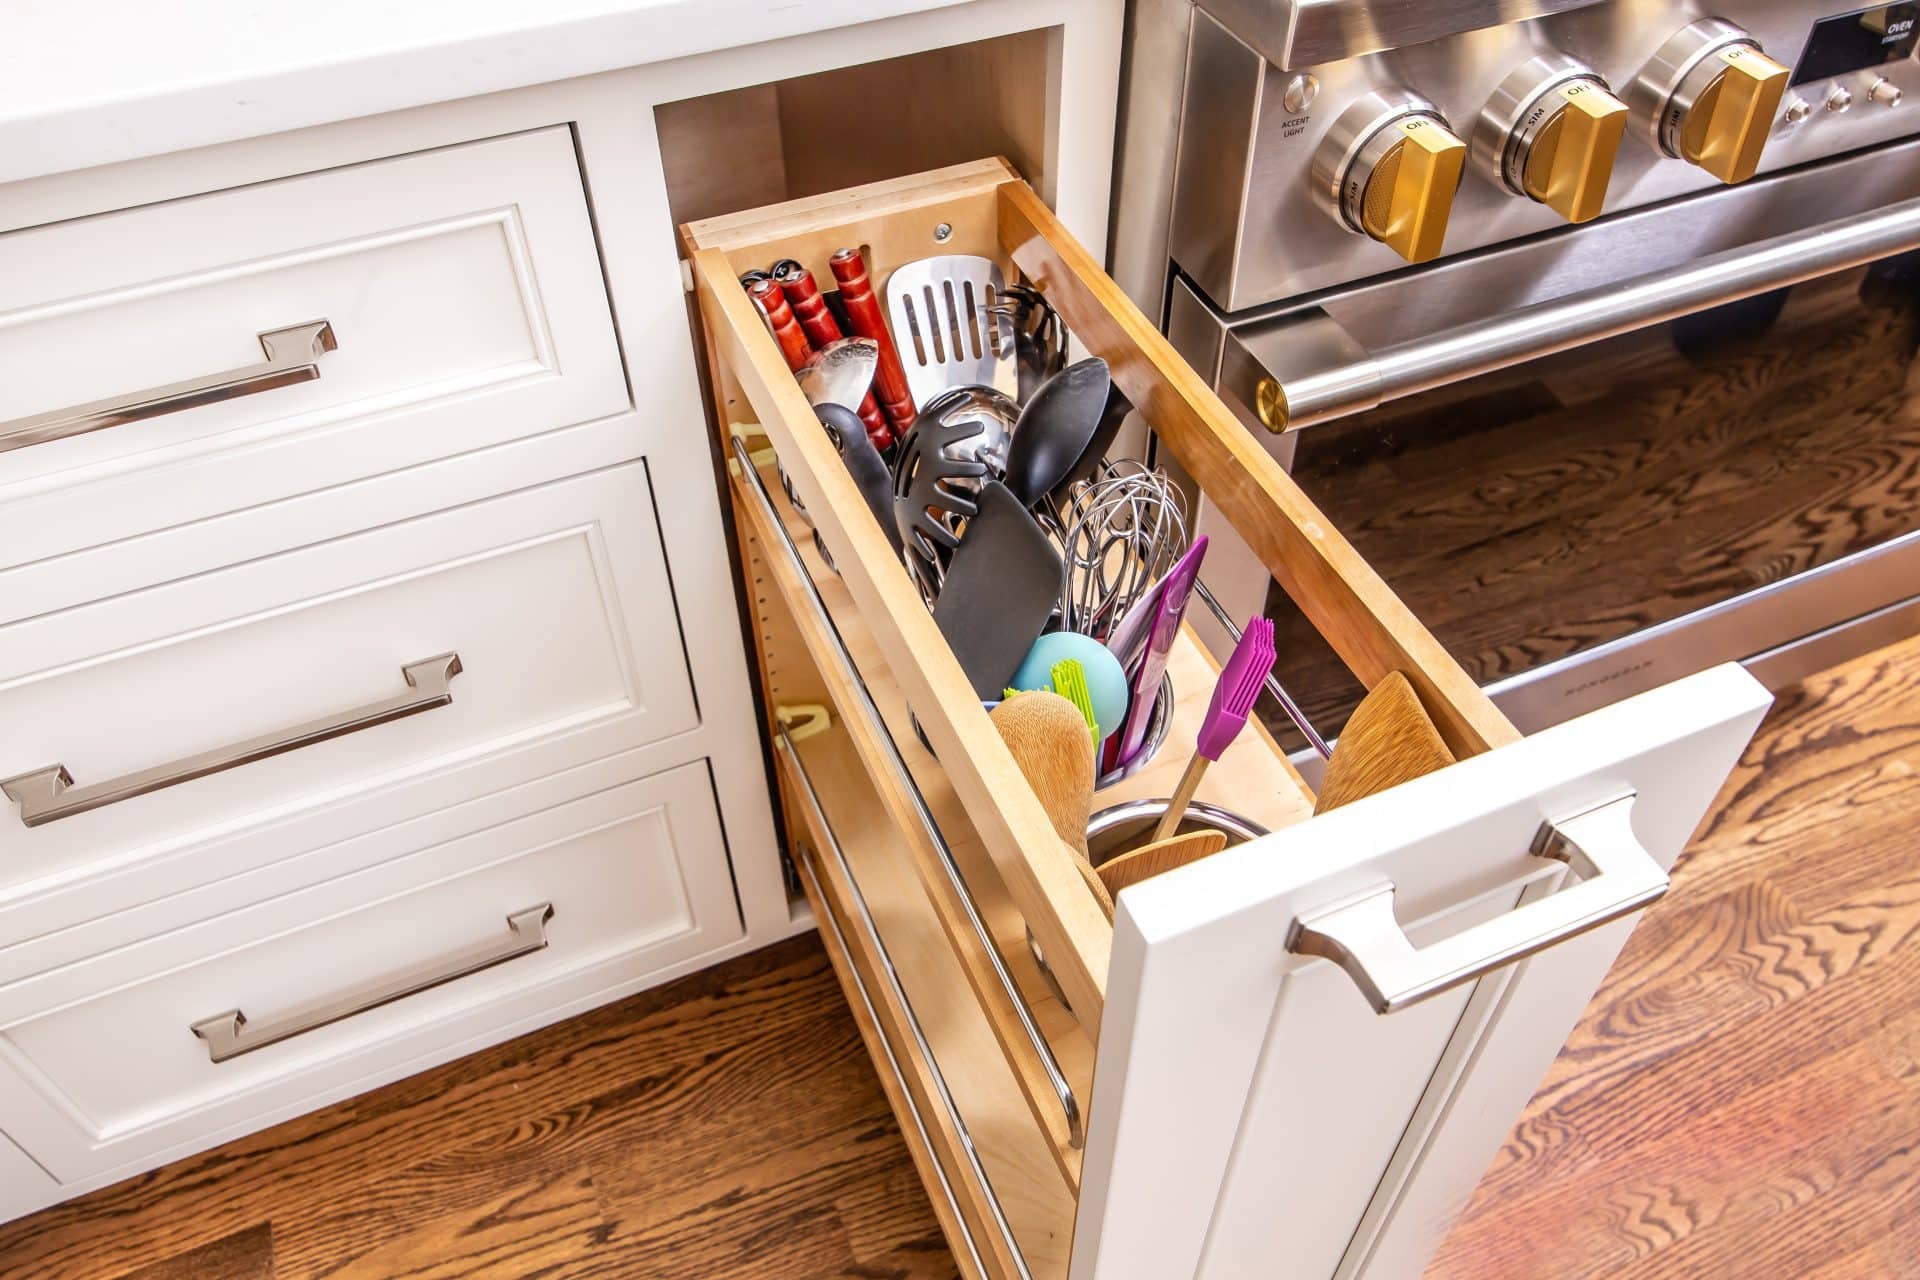 https://walkerwoodworking.com/wp-content/uploads/2023/02/Walker-Woodworking-custom-cabinets-utensil-canister-drawer-Belwith-keeler-hardware-pull-out-kitchen-hardware.jpg